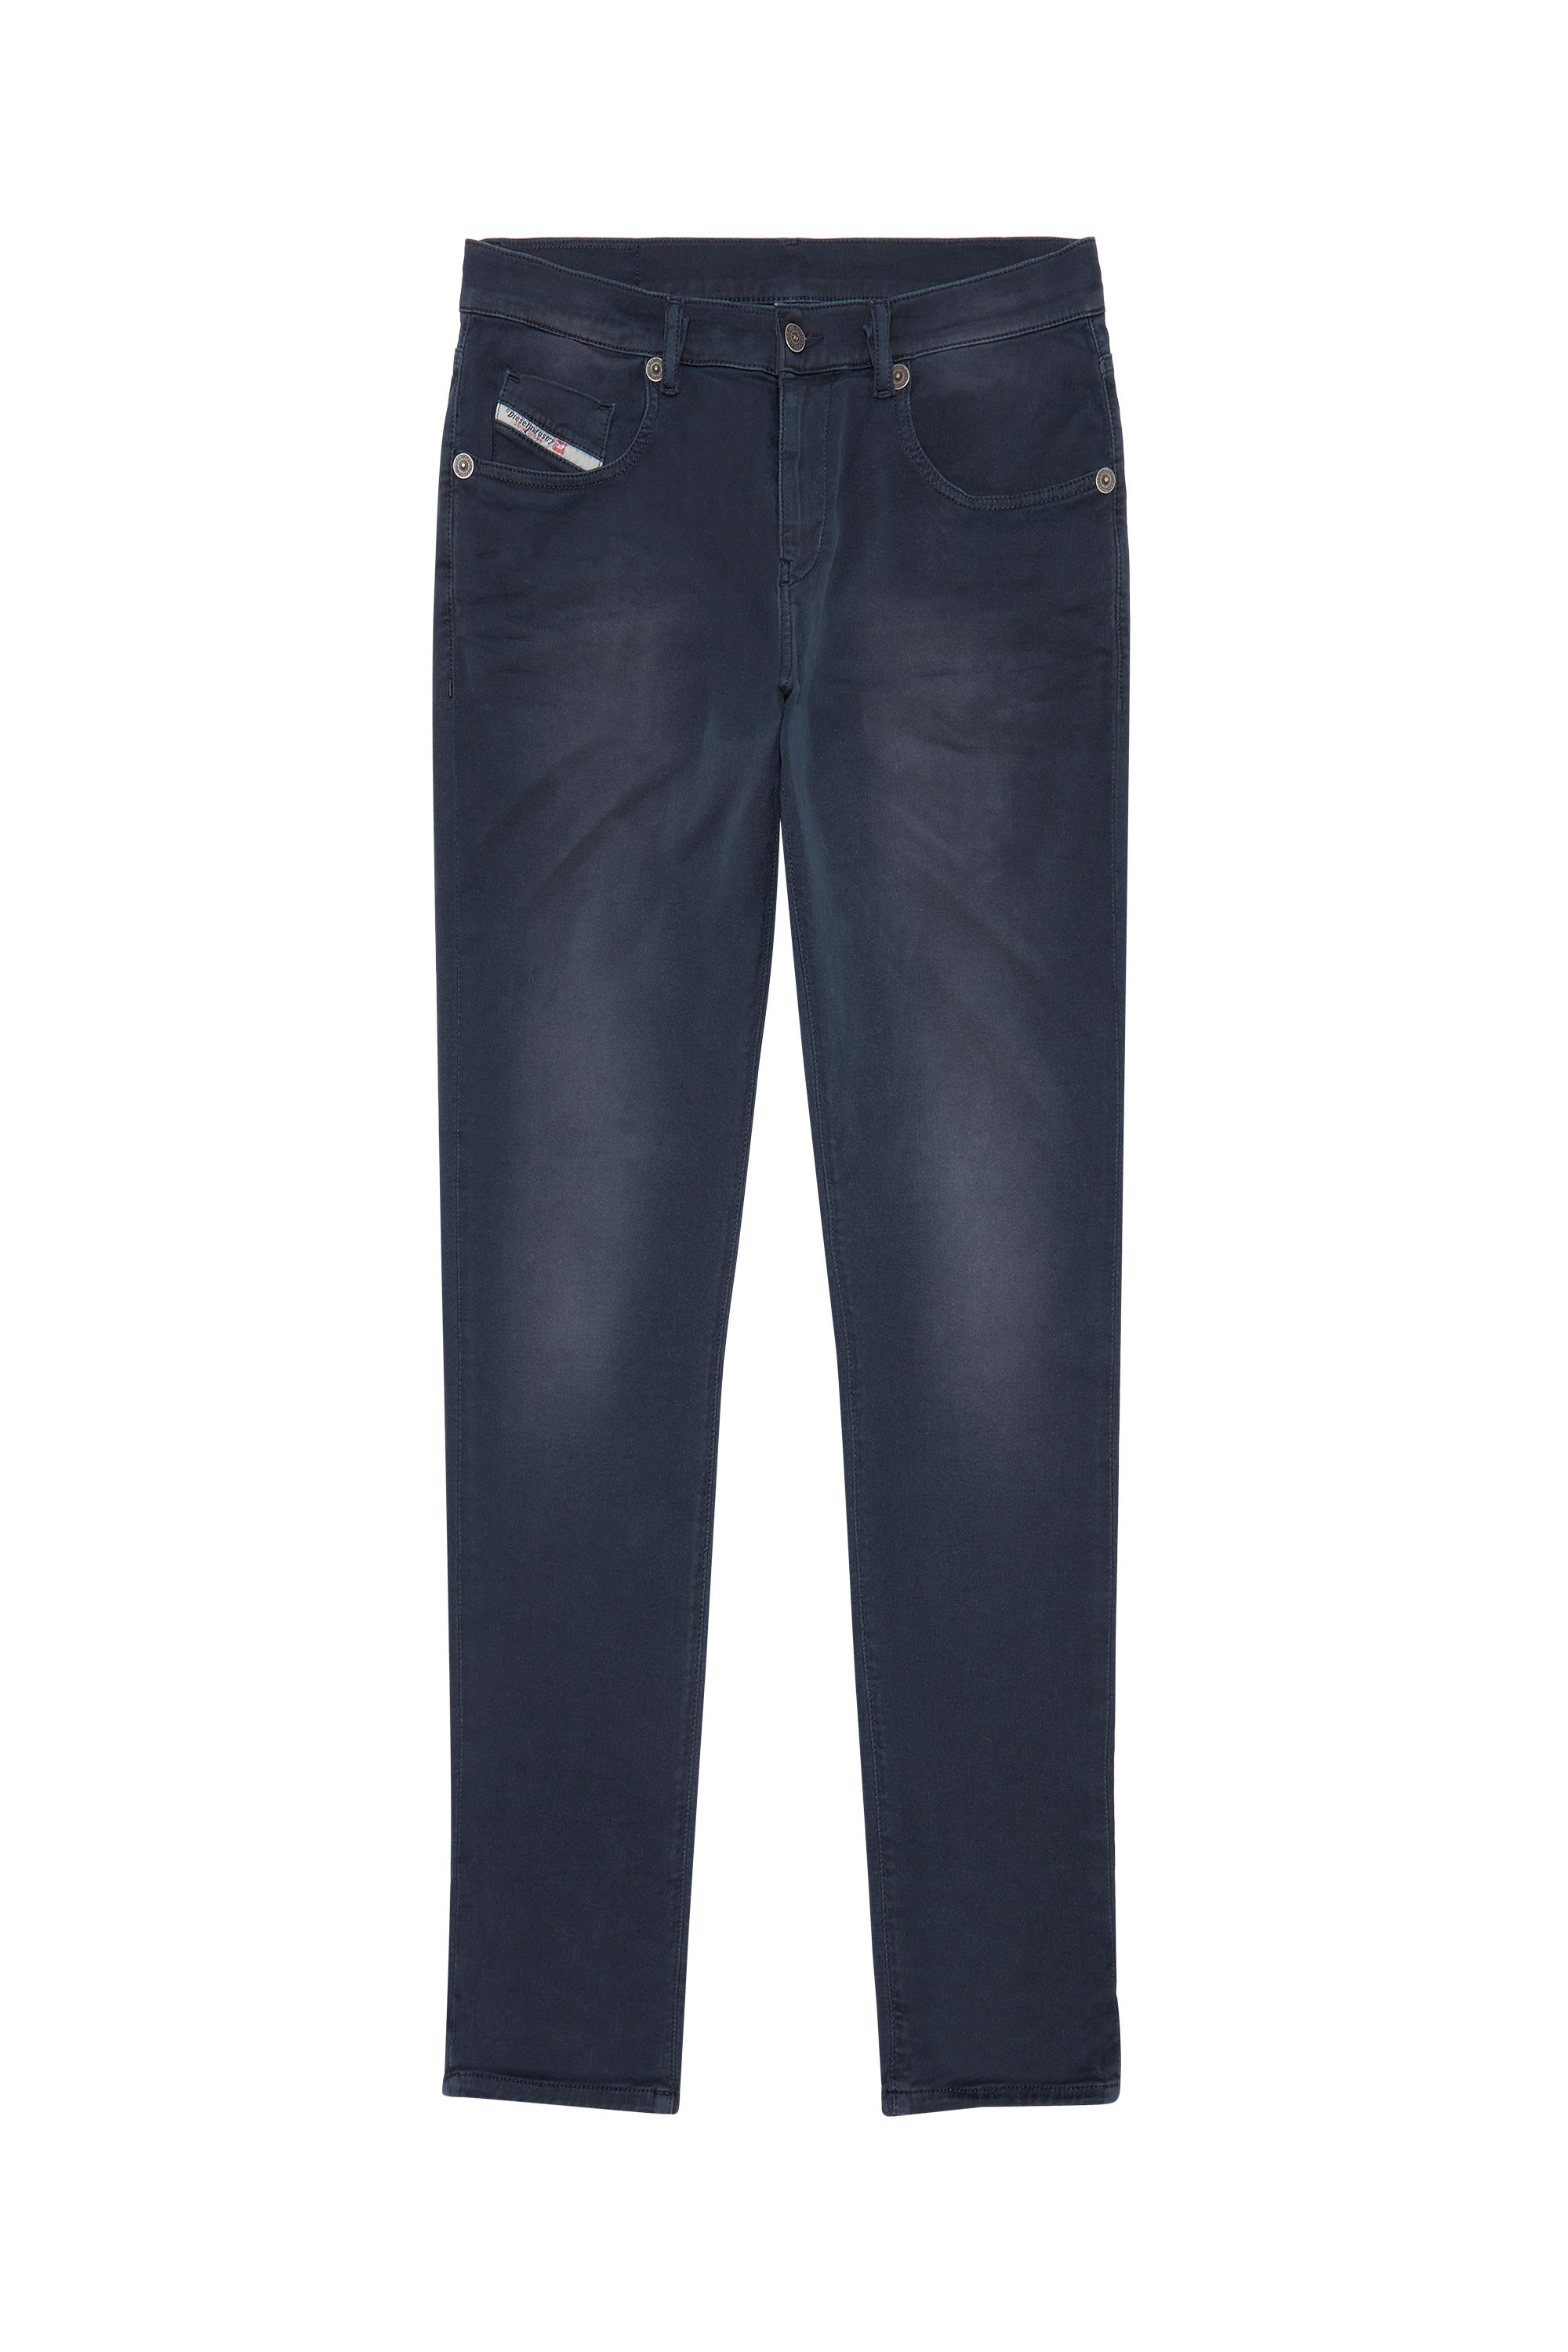 One Public Jeans Herren Hose OneP Jeansnet Jogg Denim Used Slim Fit Blau 8008 